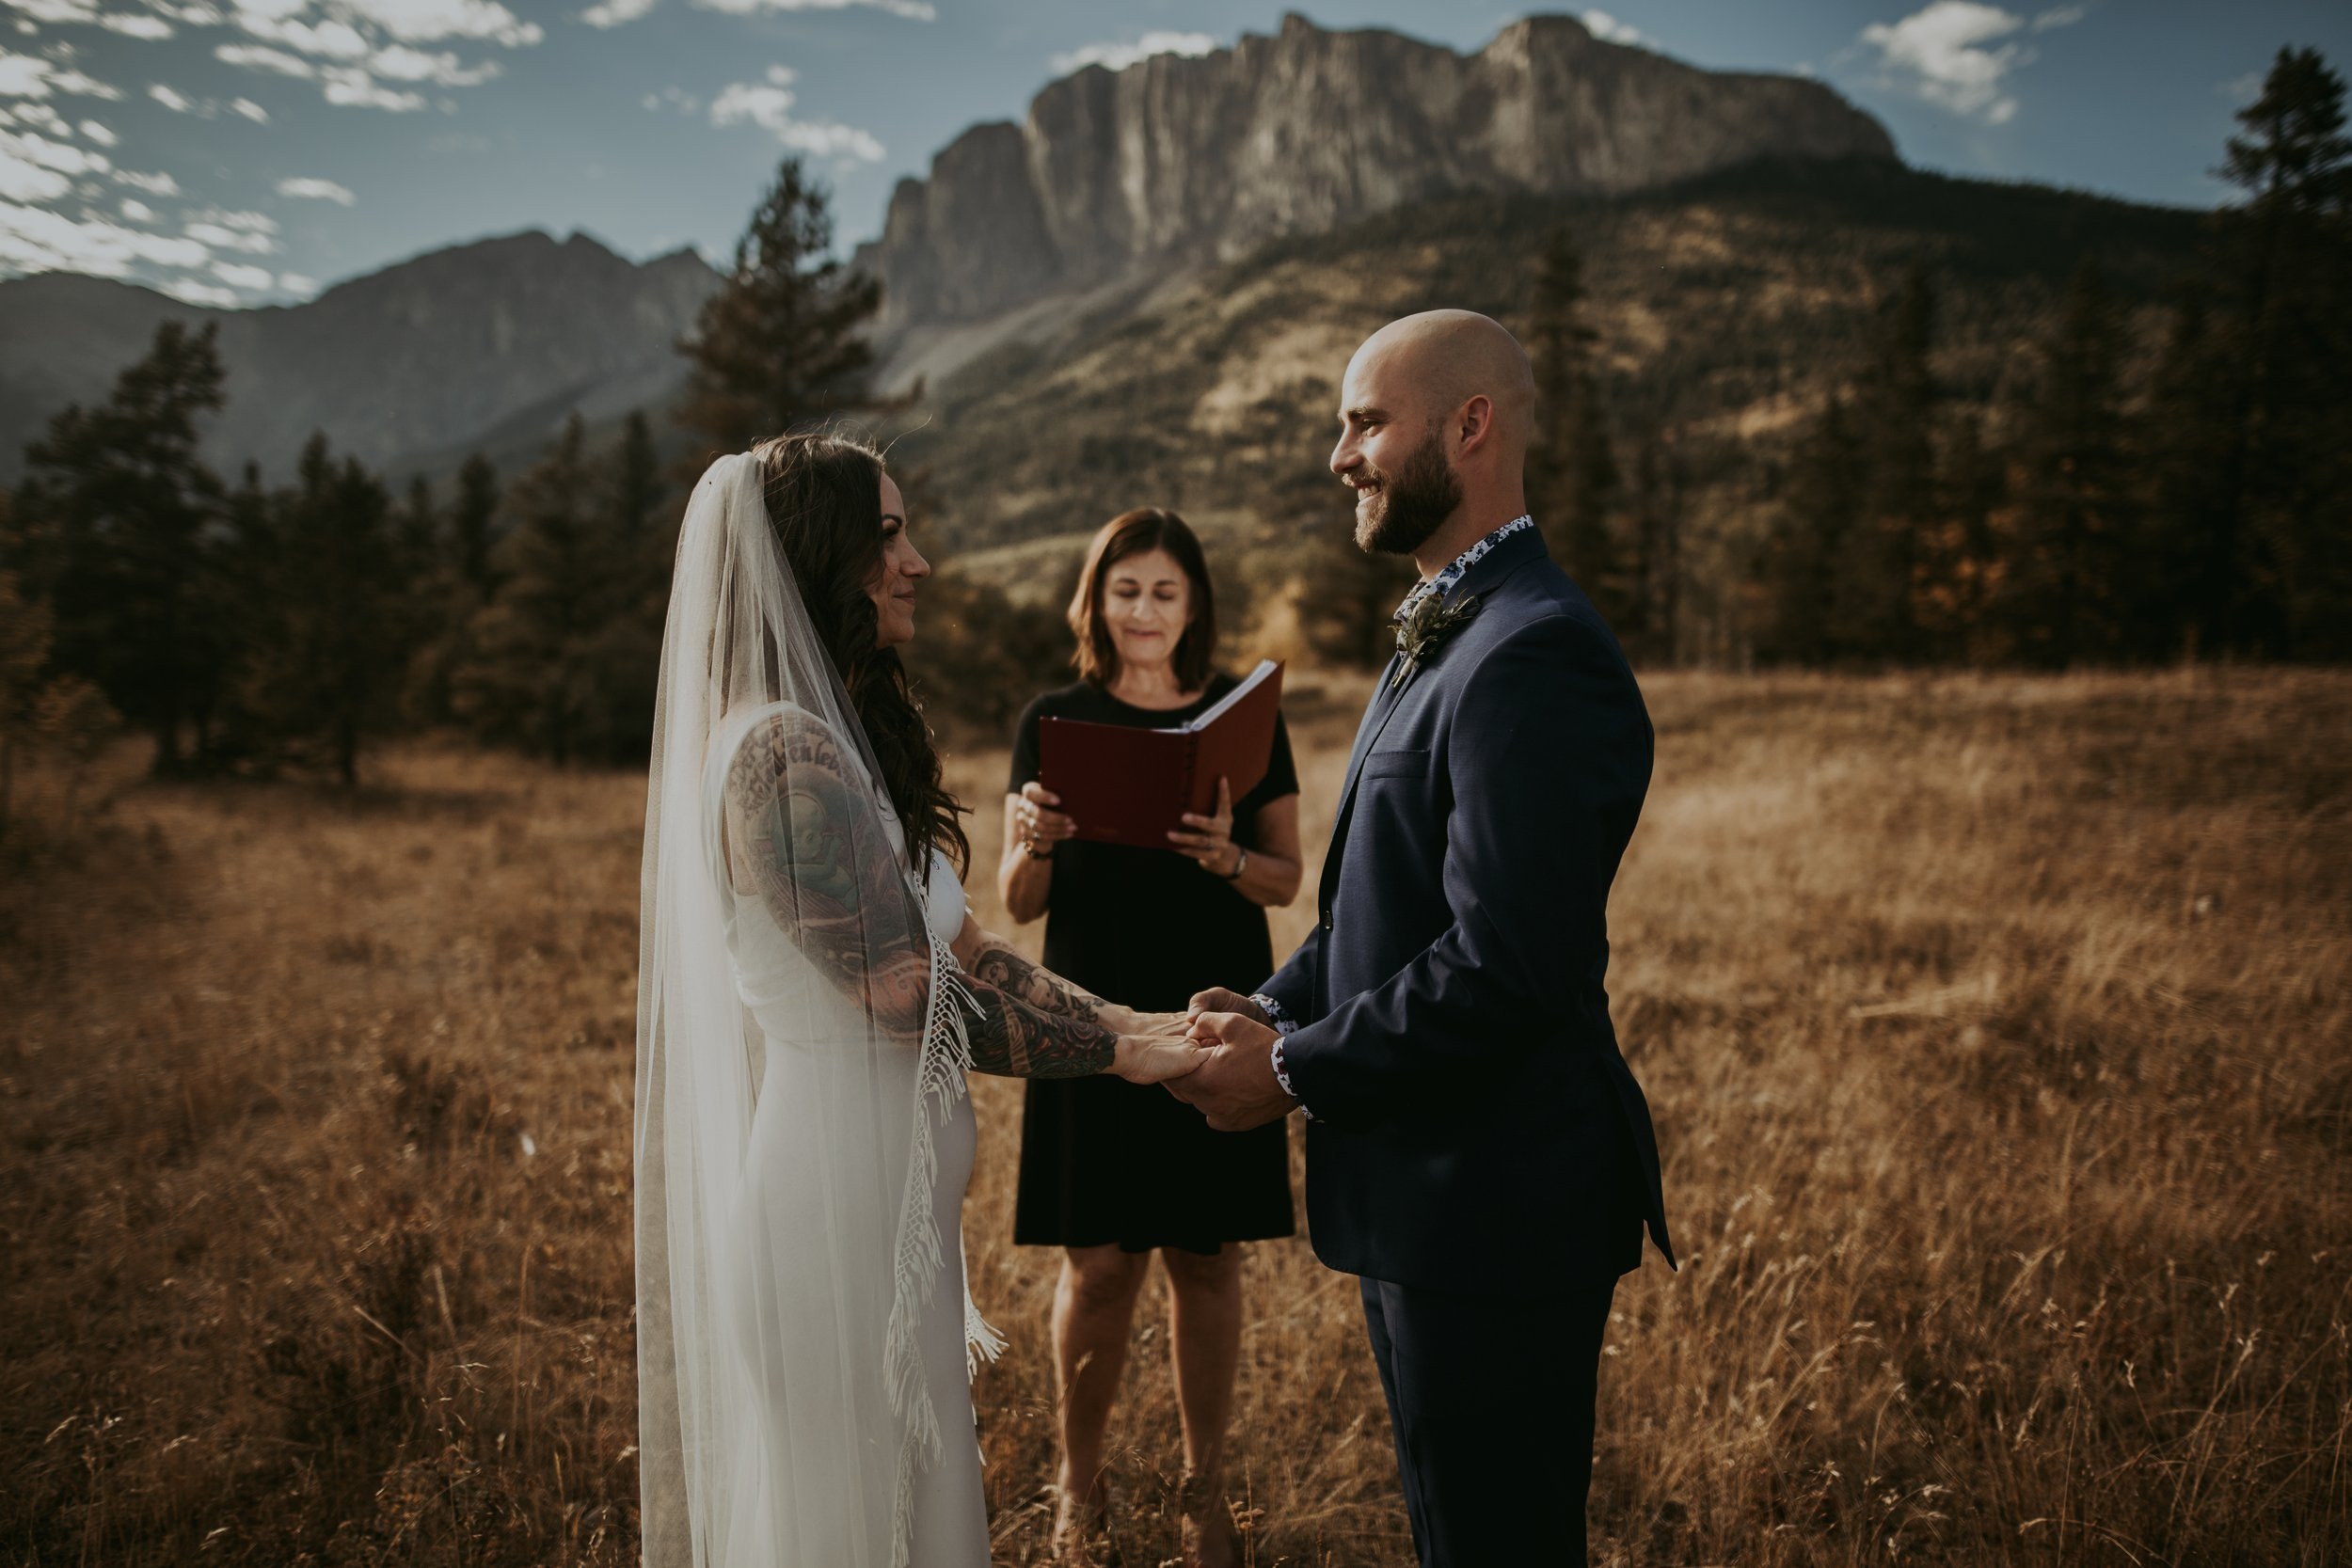 Banff ceremony location, ceremony location canmore, wedding photos in Banff